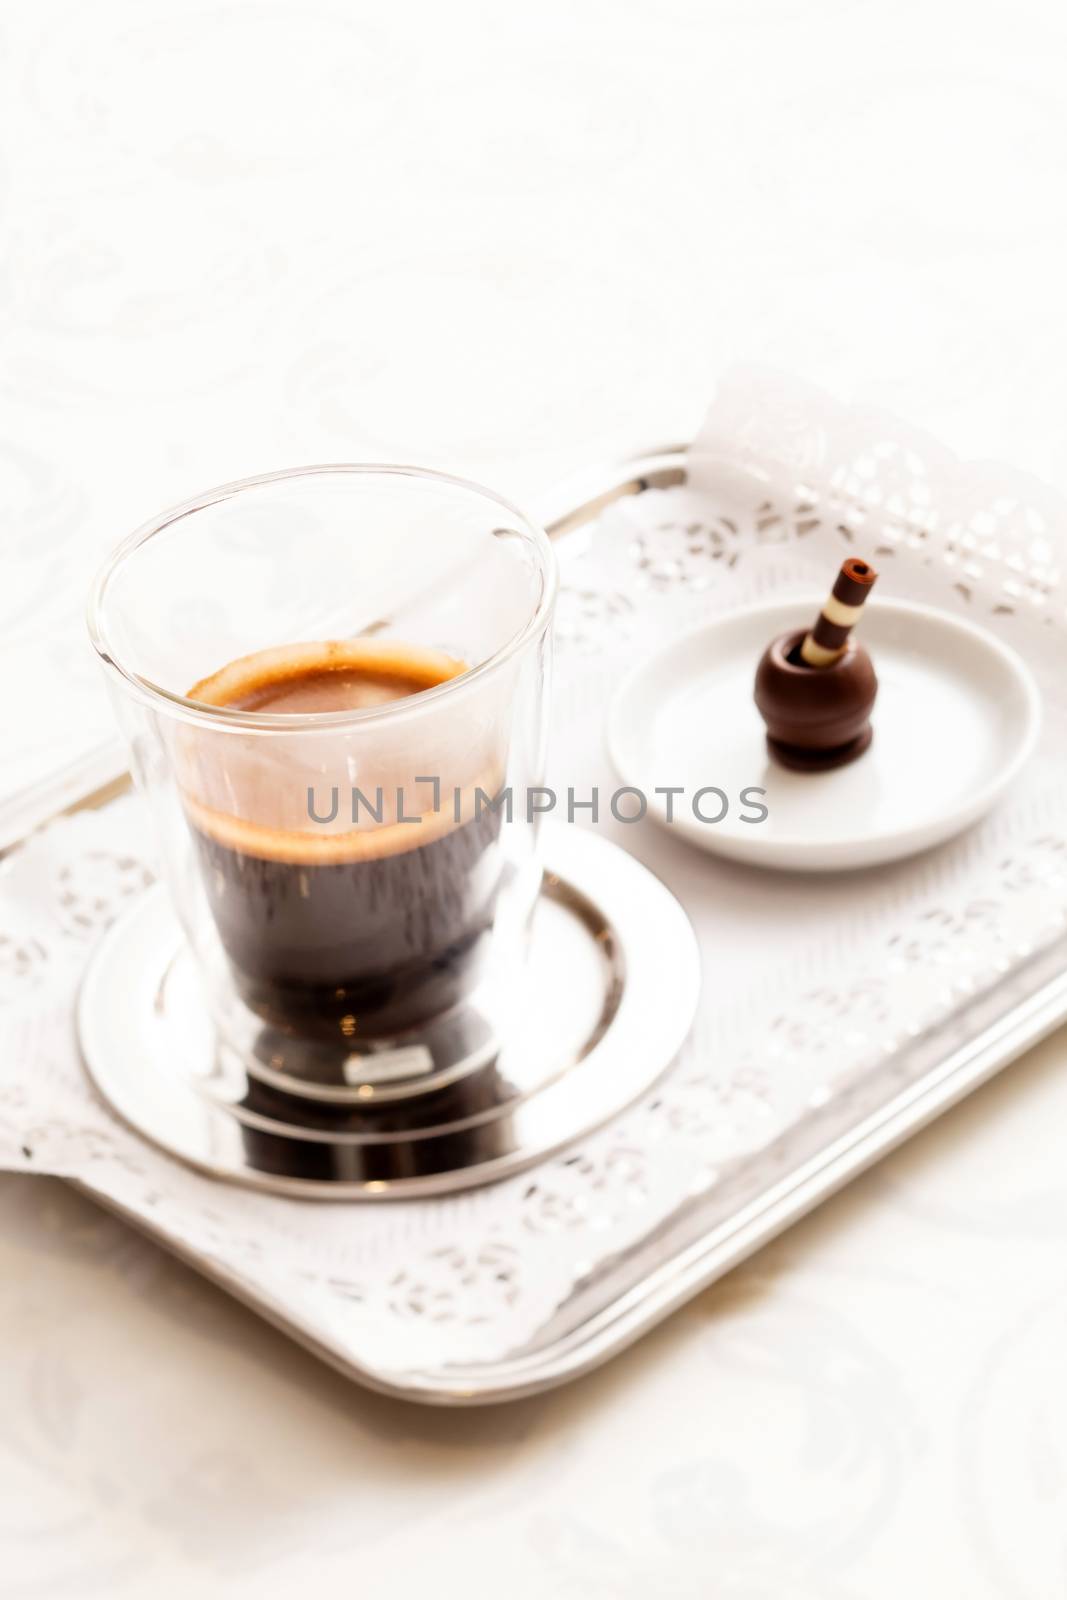 espresso with chocolate sweet